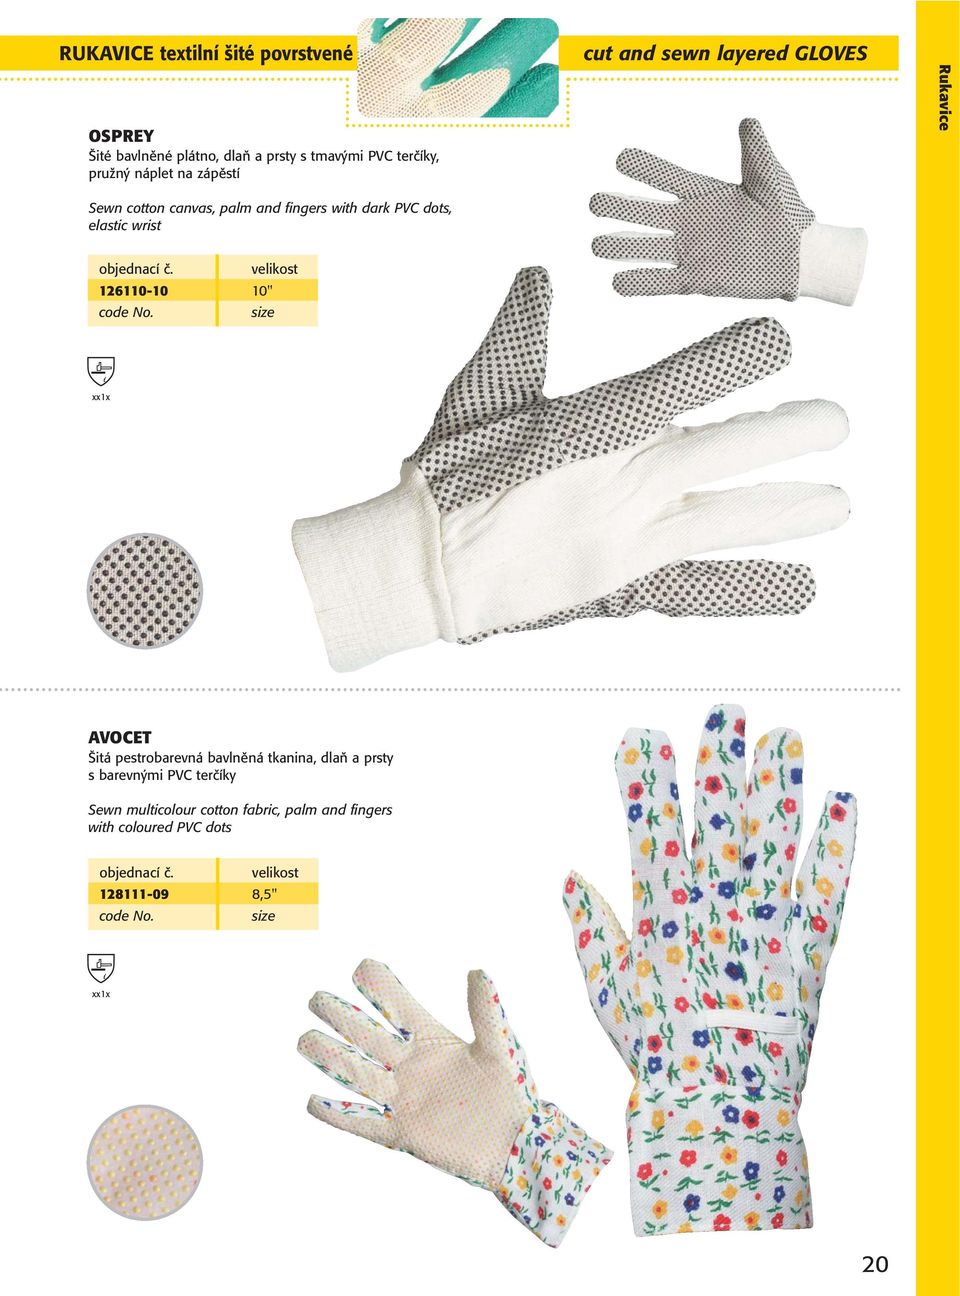 dots, elastic wrist 126110-10 10" xx1x AVOCET Šitá pestrobarevná bavlněná tkanina, dlaň a prsty s